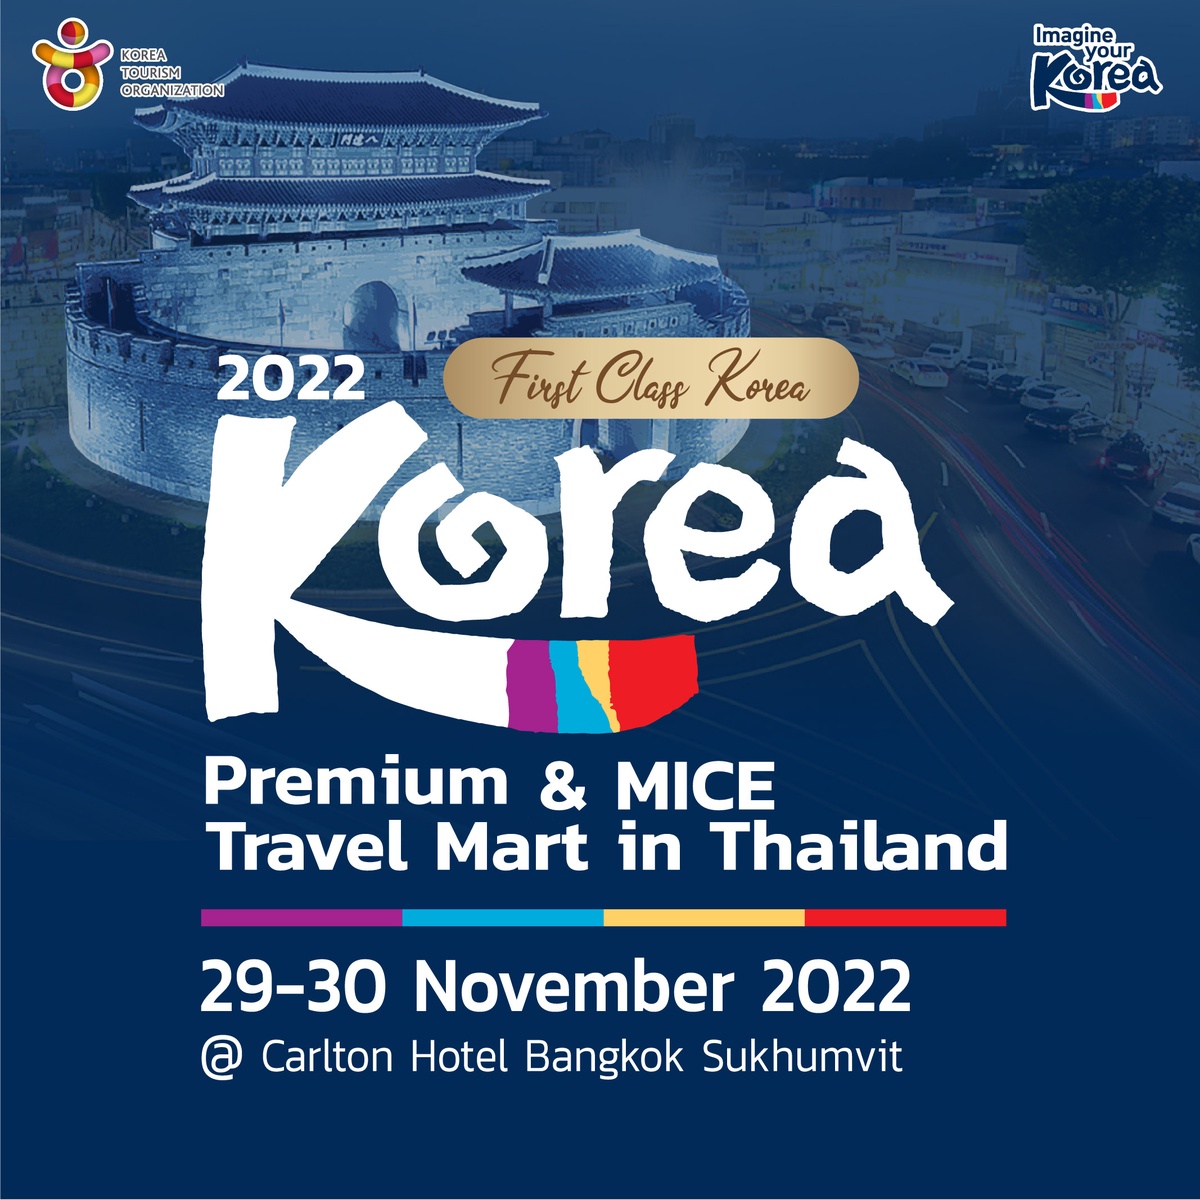 KTO จัดงาน Premium MICE Travel Mart in Thailand 2022-First Class Korea 29-30 พฤศจิกายนนี้ ณ โรงแรมคาร์ลตัน กรุงเทพฯ สุขุมวิท